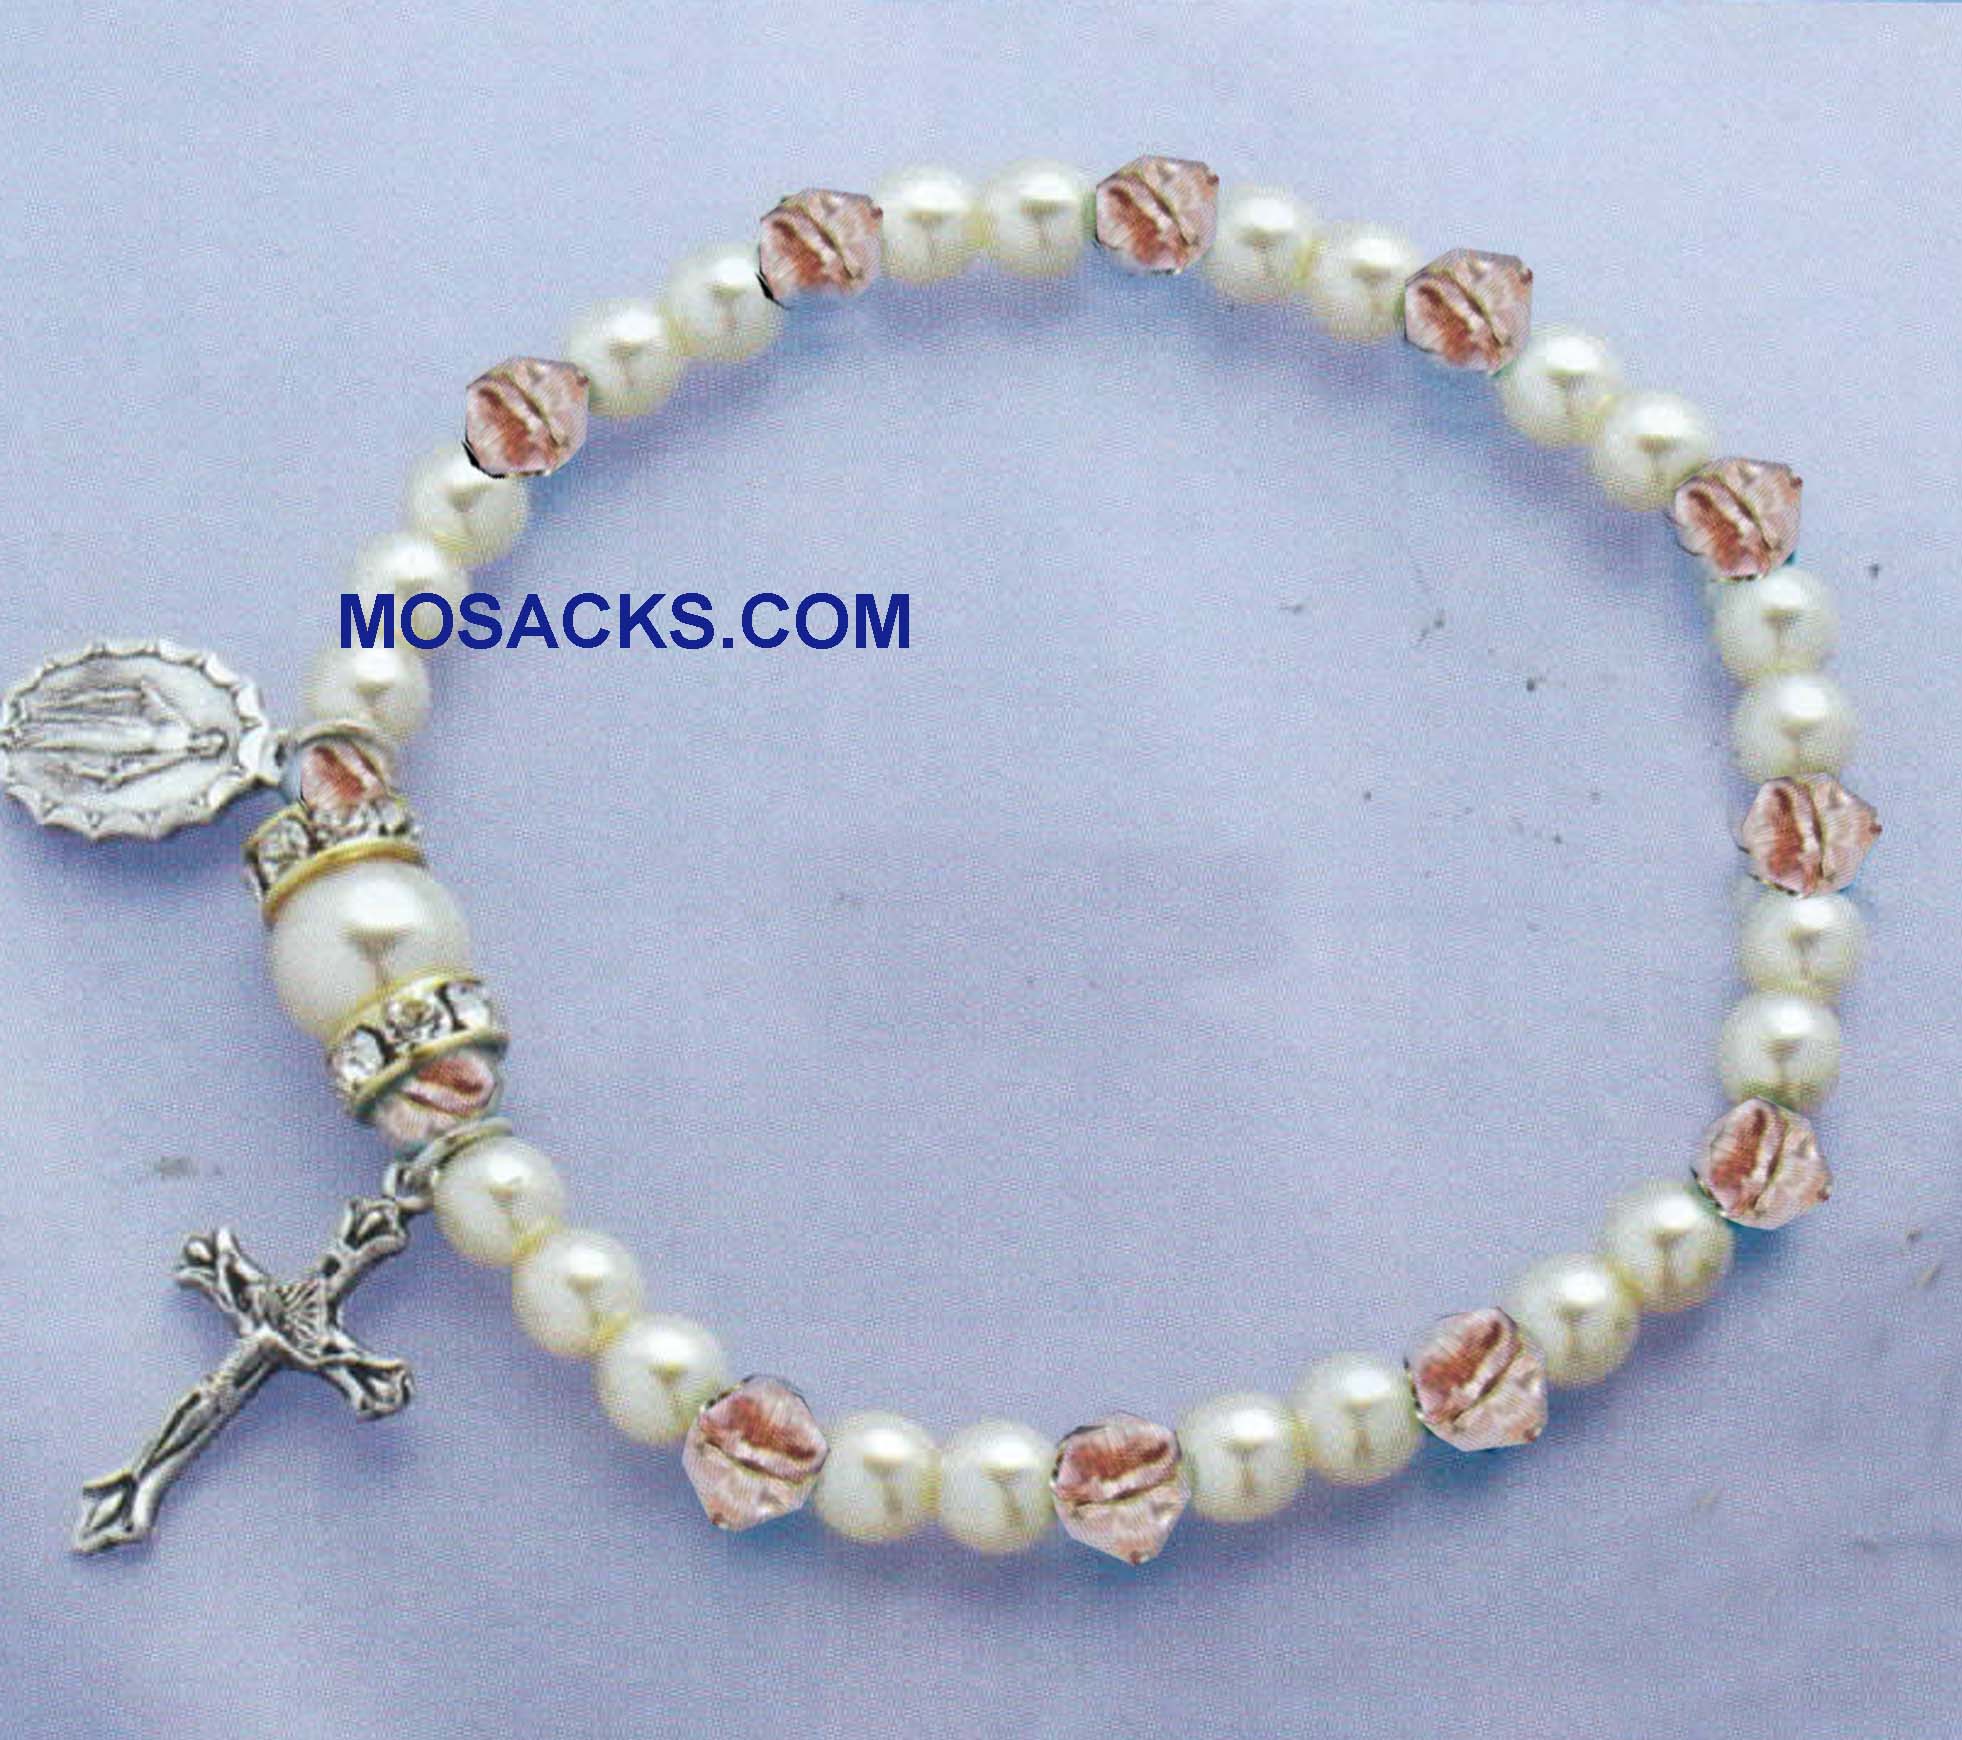 October Birthstone Rosary Stretch Bracelet Rose Zircon – 45280RZ Rose Zircon One Decade Rosary Bracelet for October